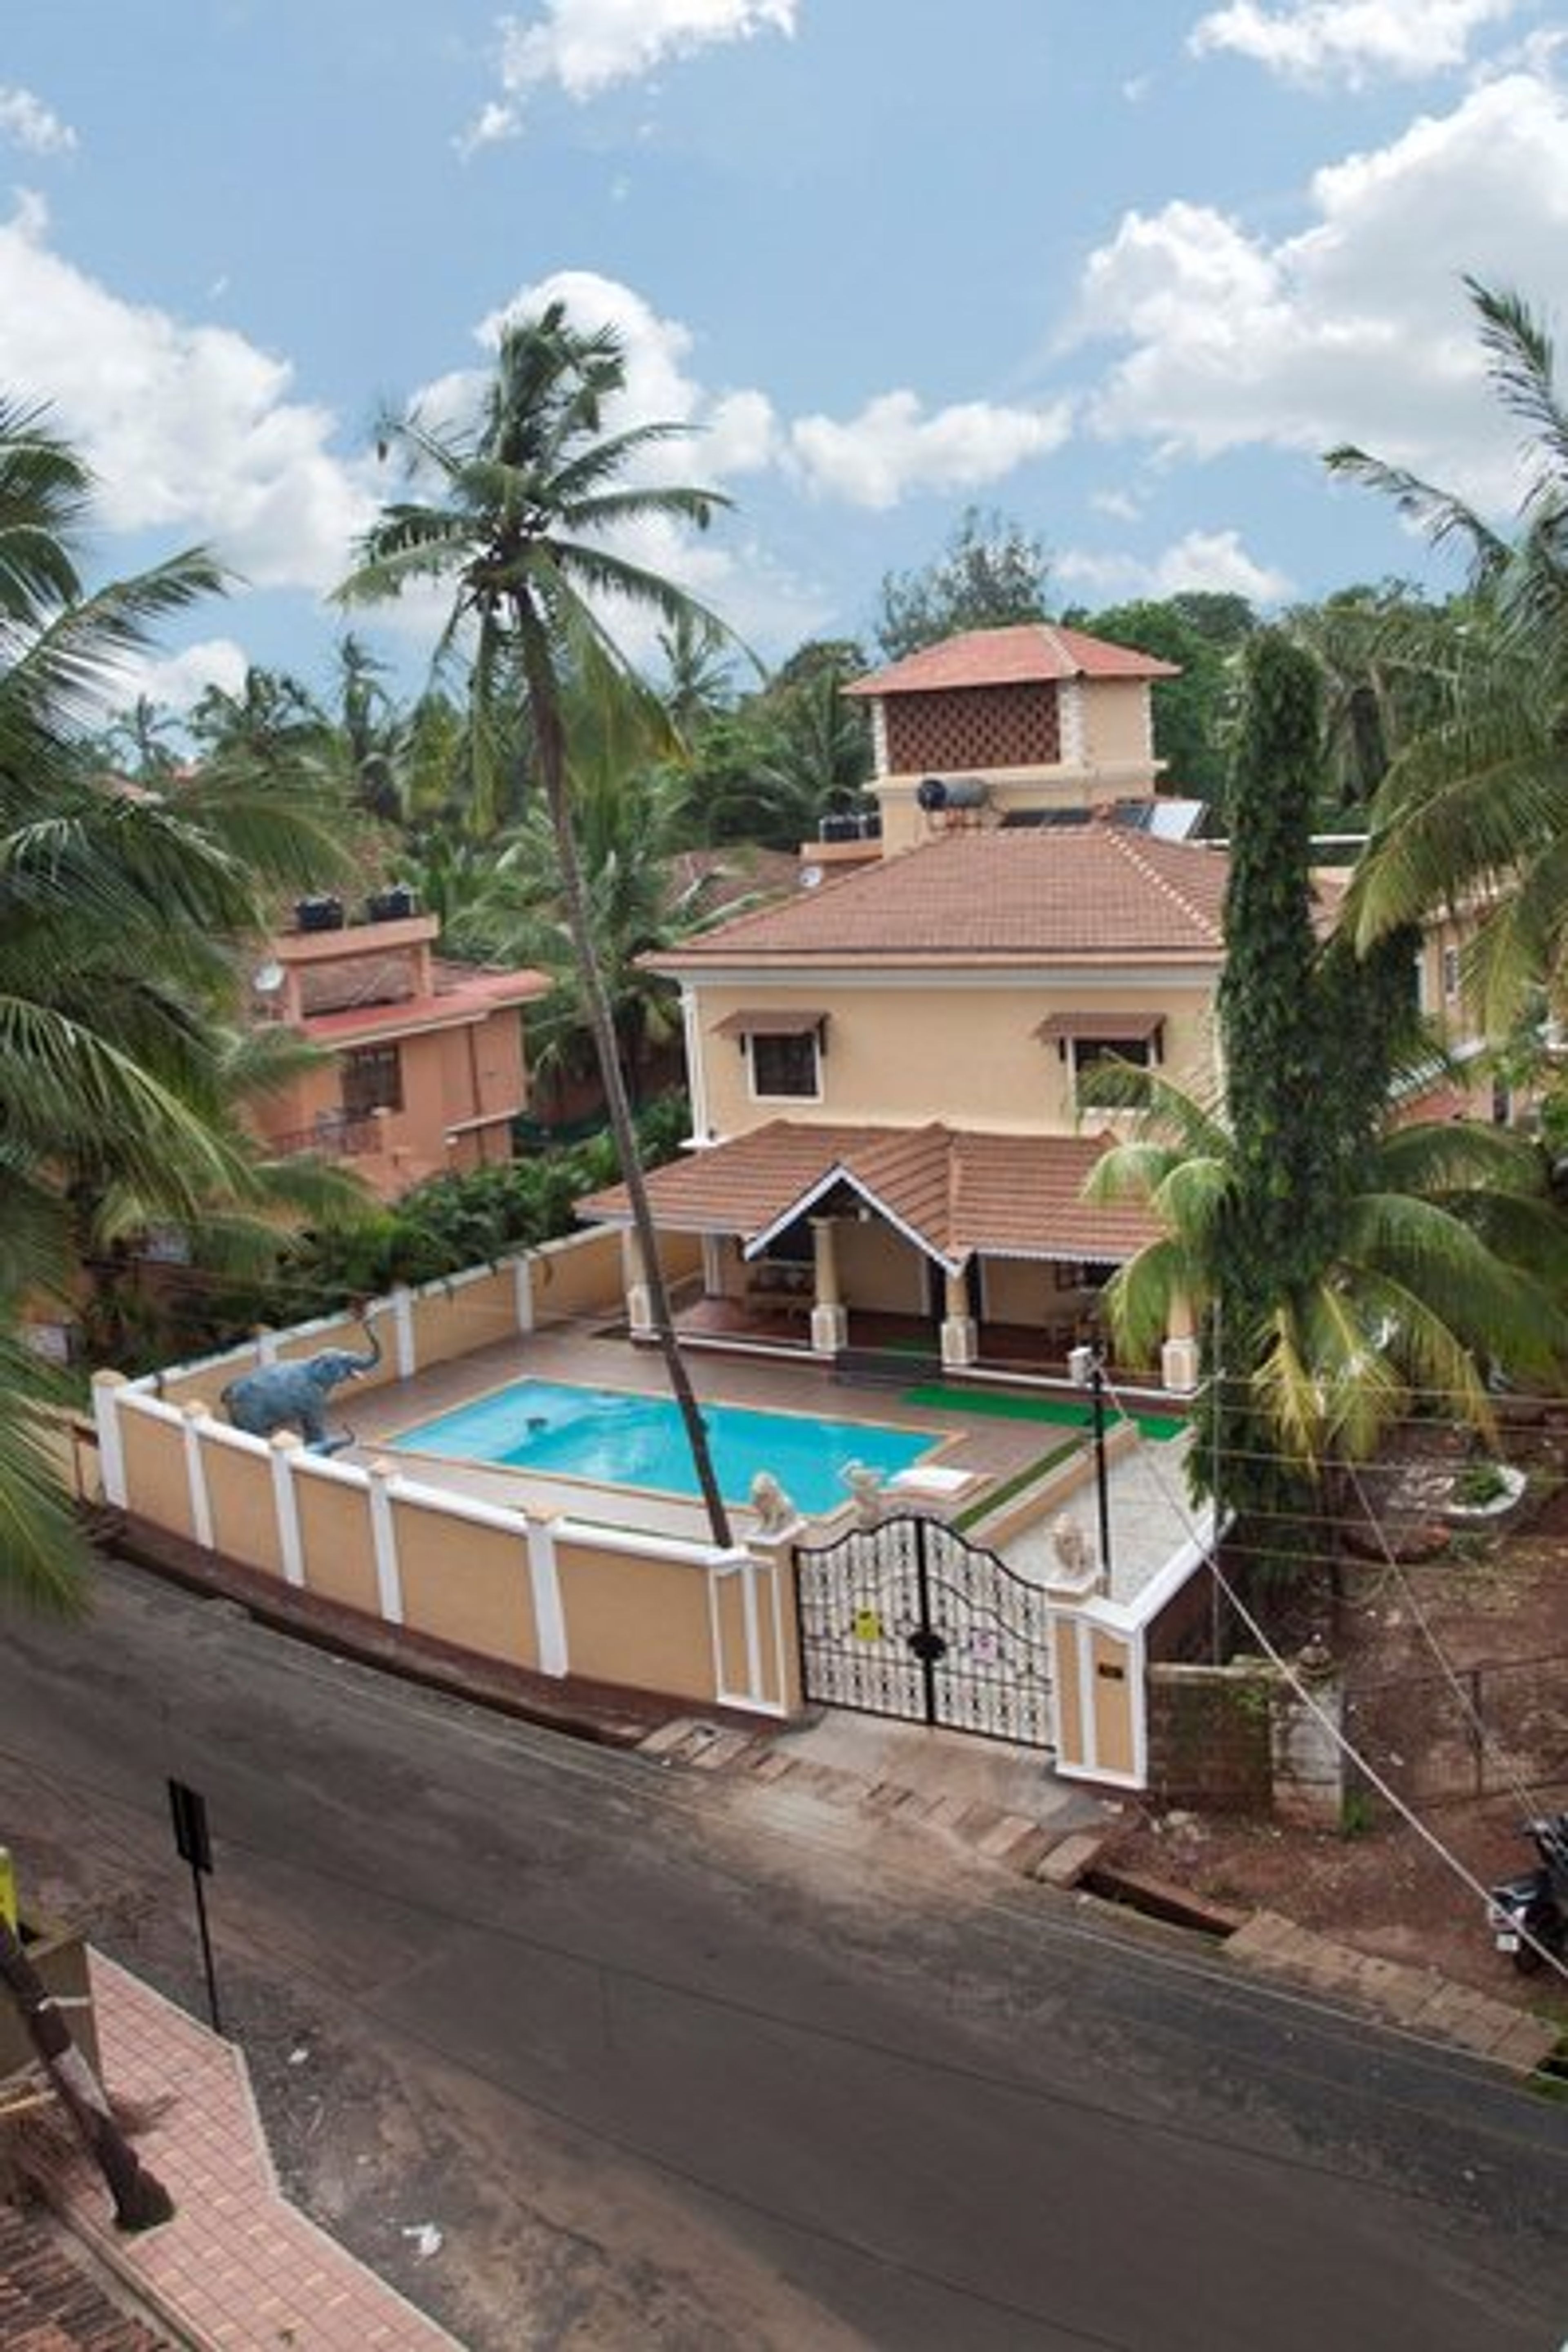 7 BHK villa in Calangute for rent